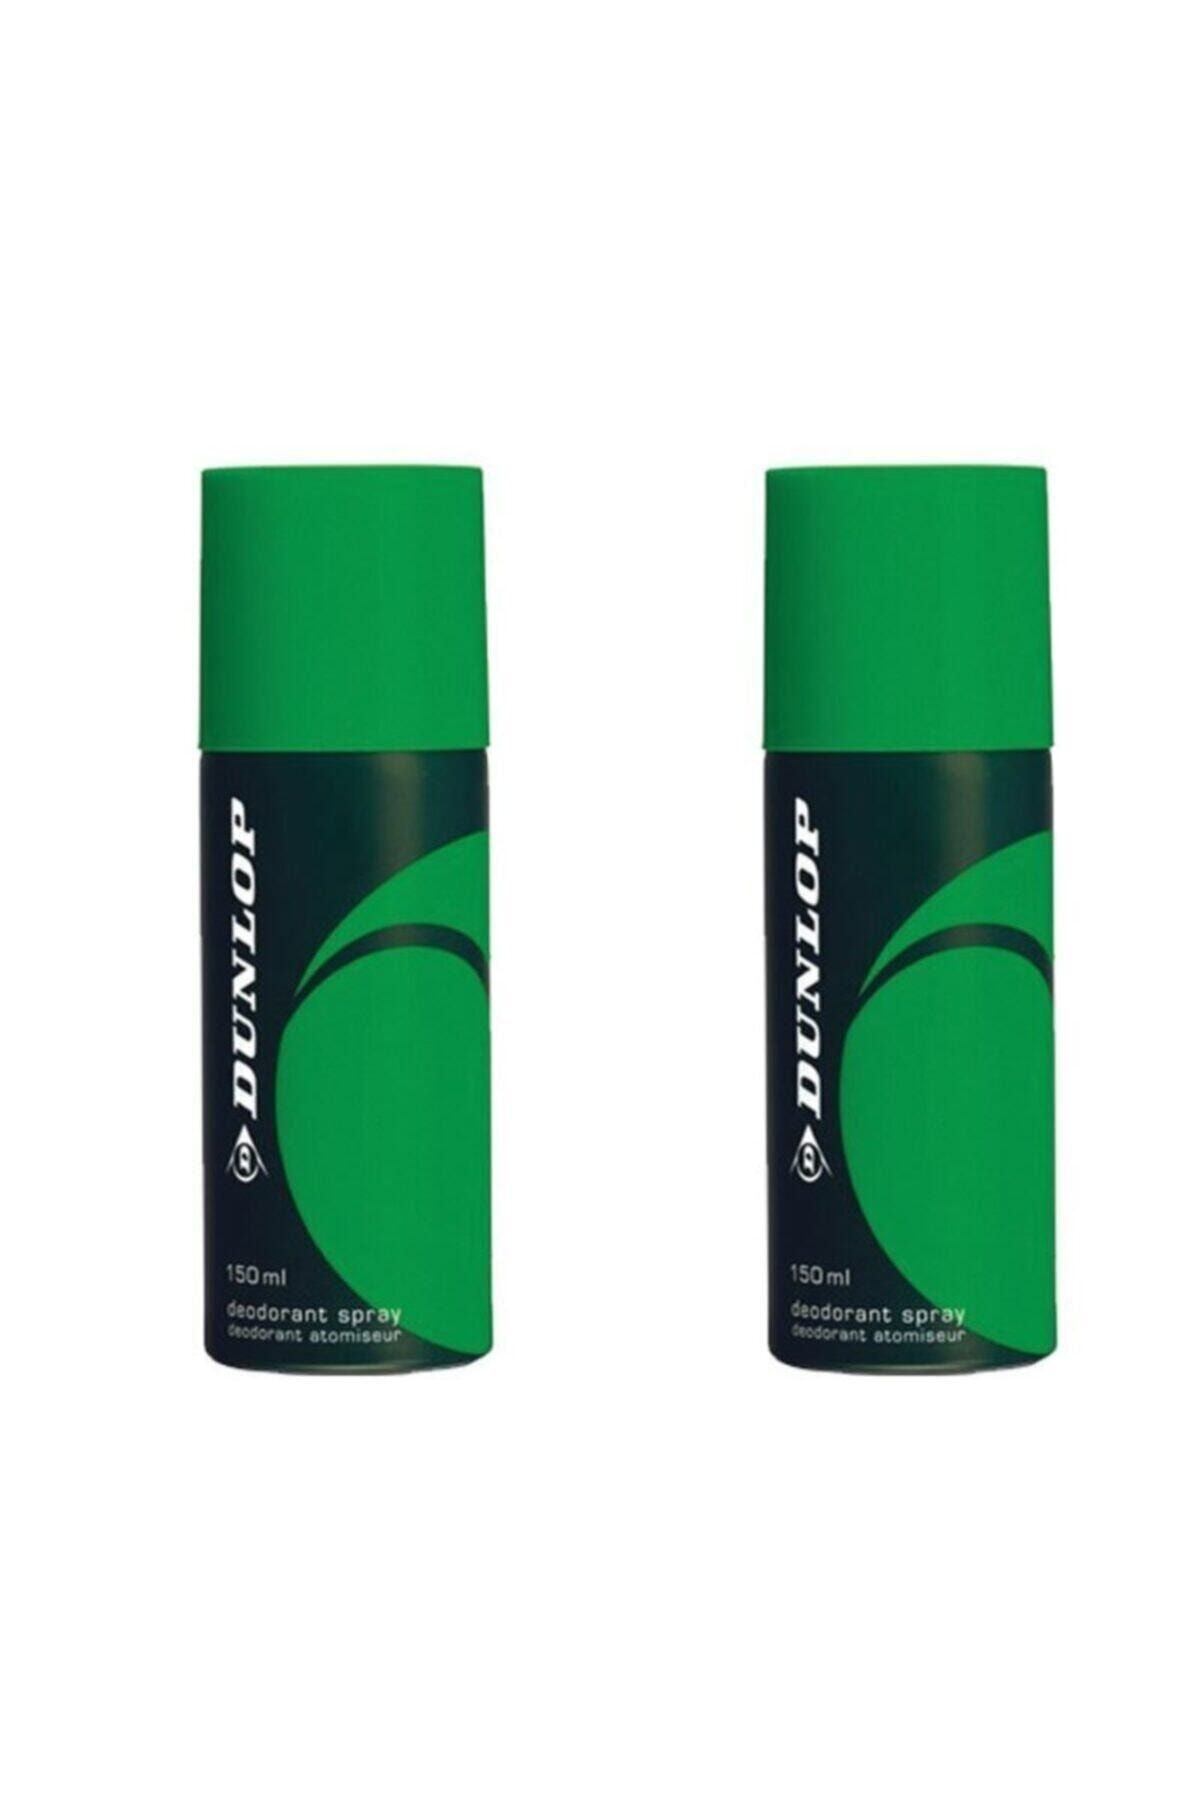 Dunlop Erkek  Yeşil Classic Deodorant 150 ml  2 Adet